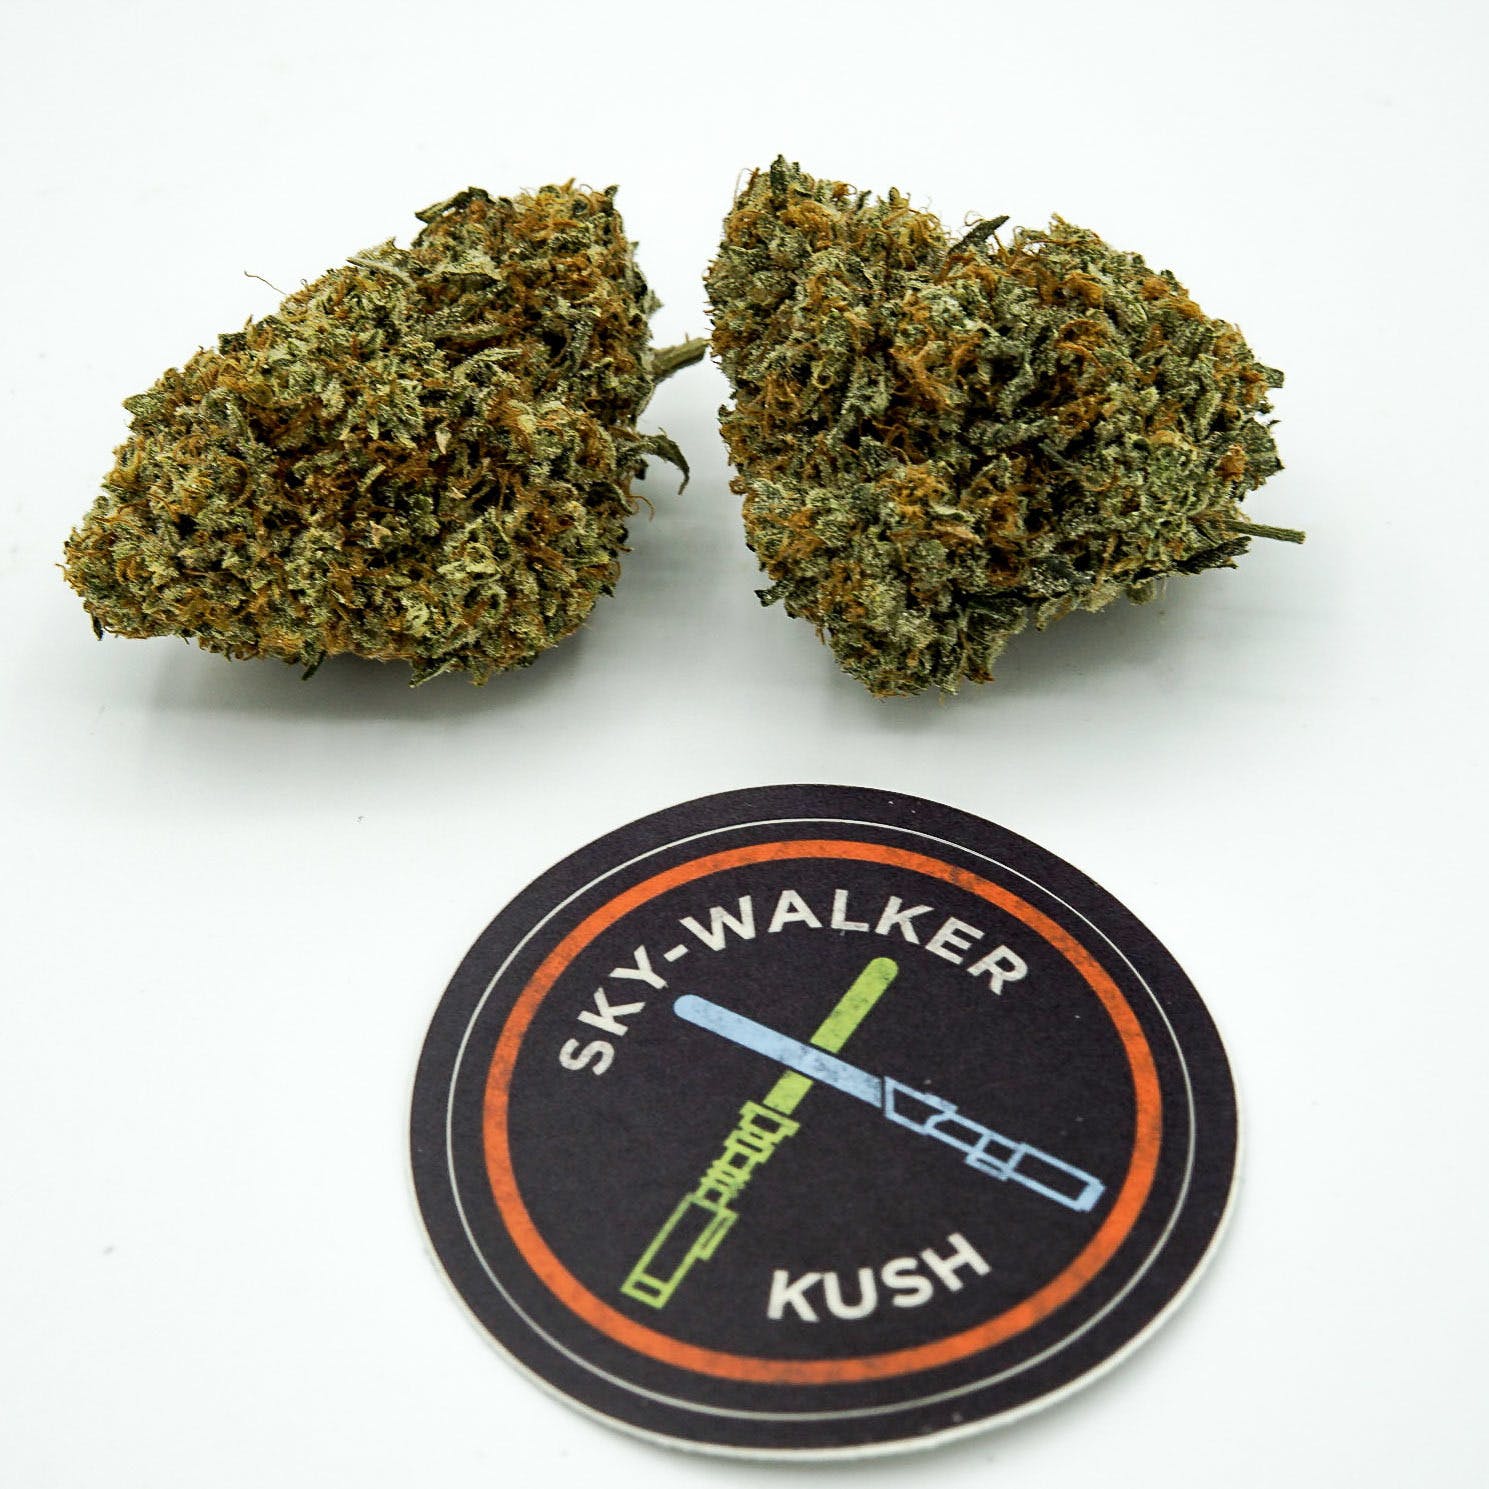 Skywalker Kush by JAR Cannabis Co.